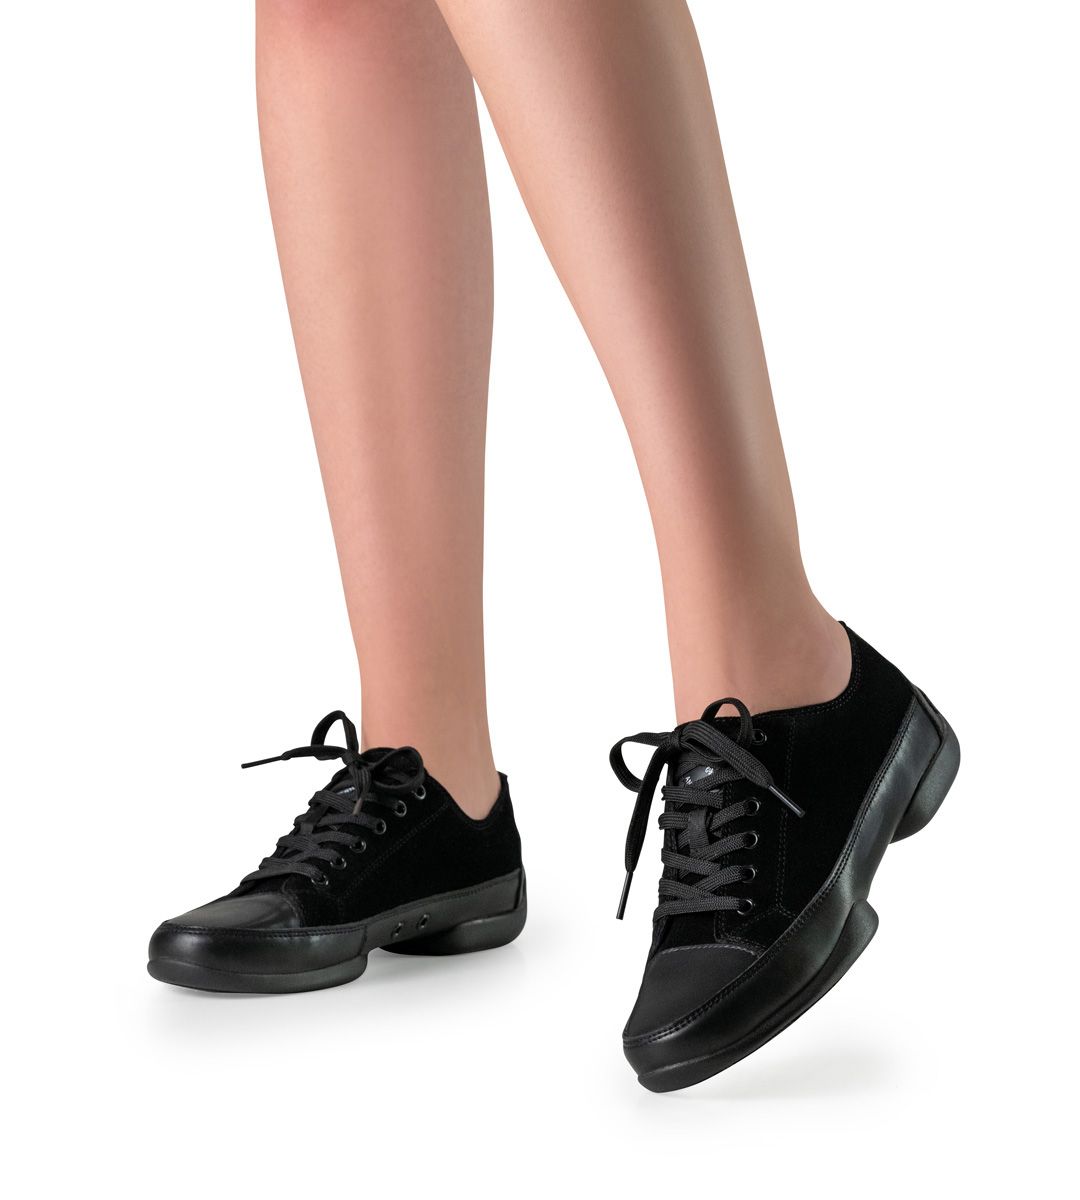 Chaussures de danse femme PERLA - Chaussures danse femme/TOUTES - Chauss'n  Danse